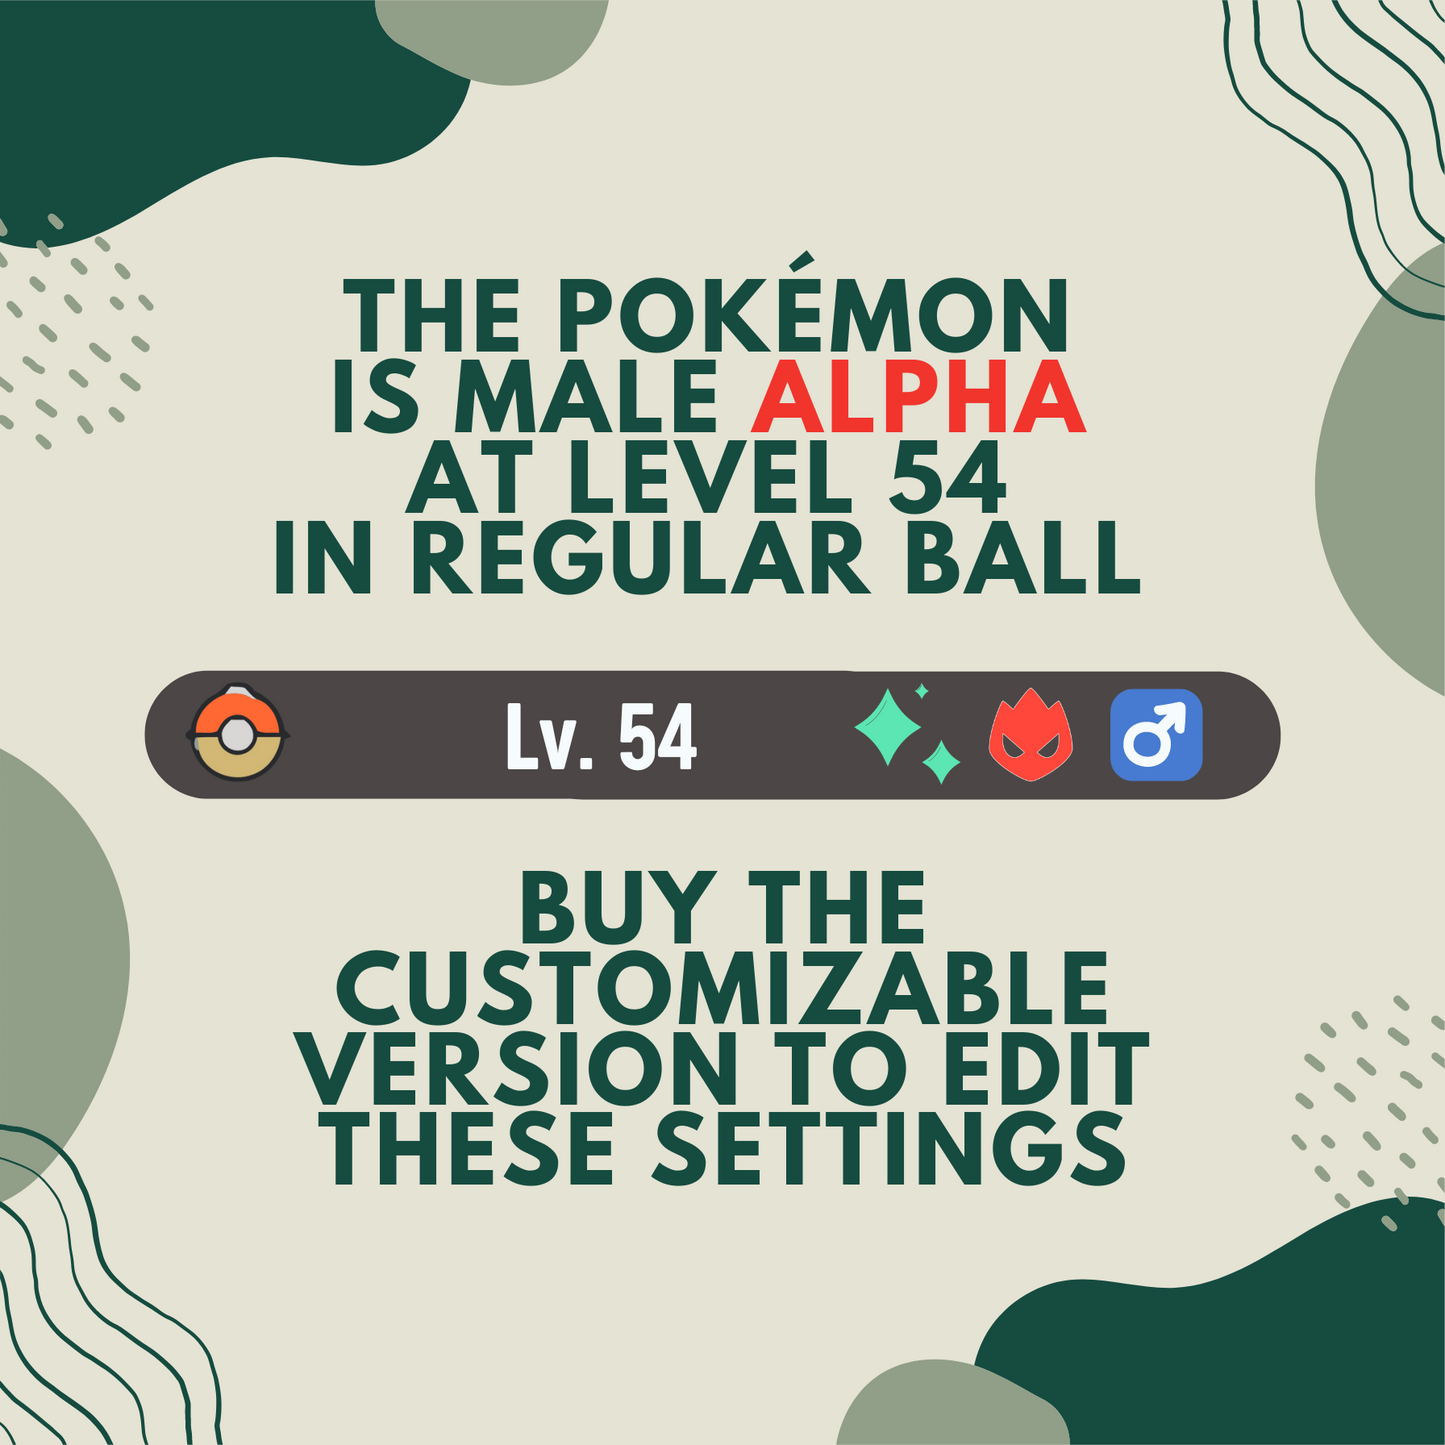 Voltorb Hisui Shiny ✨ Legends Pokémon Arceus 6 IV Custom OT Level Alpha by Shiny Living Dex | Shiny Living Dex